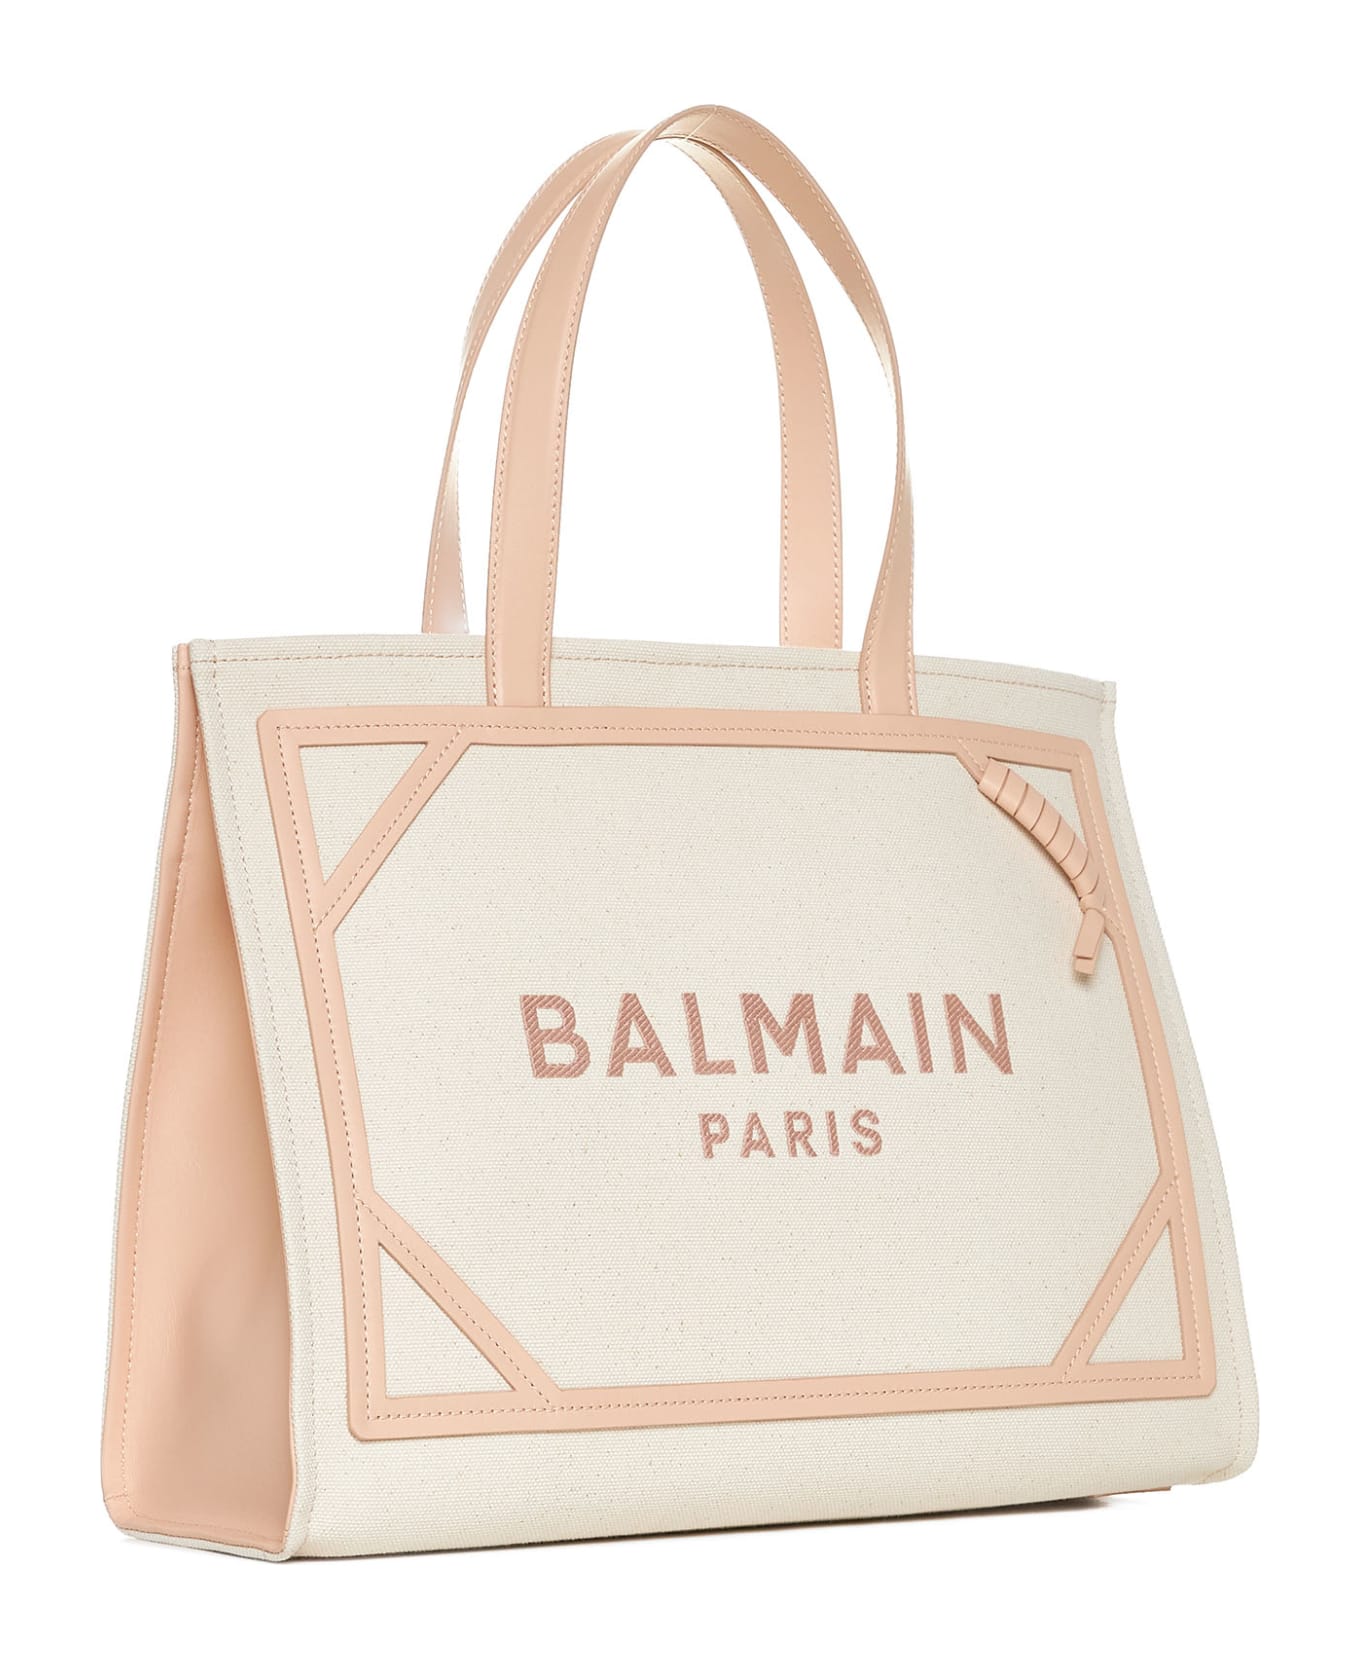 Balmain Shopping Bag - Creme/nude rosè